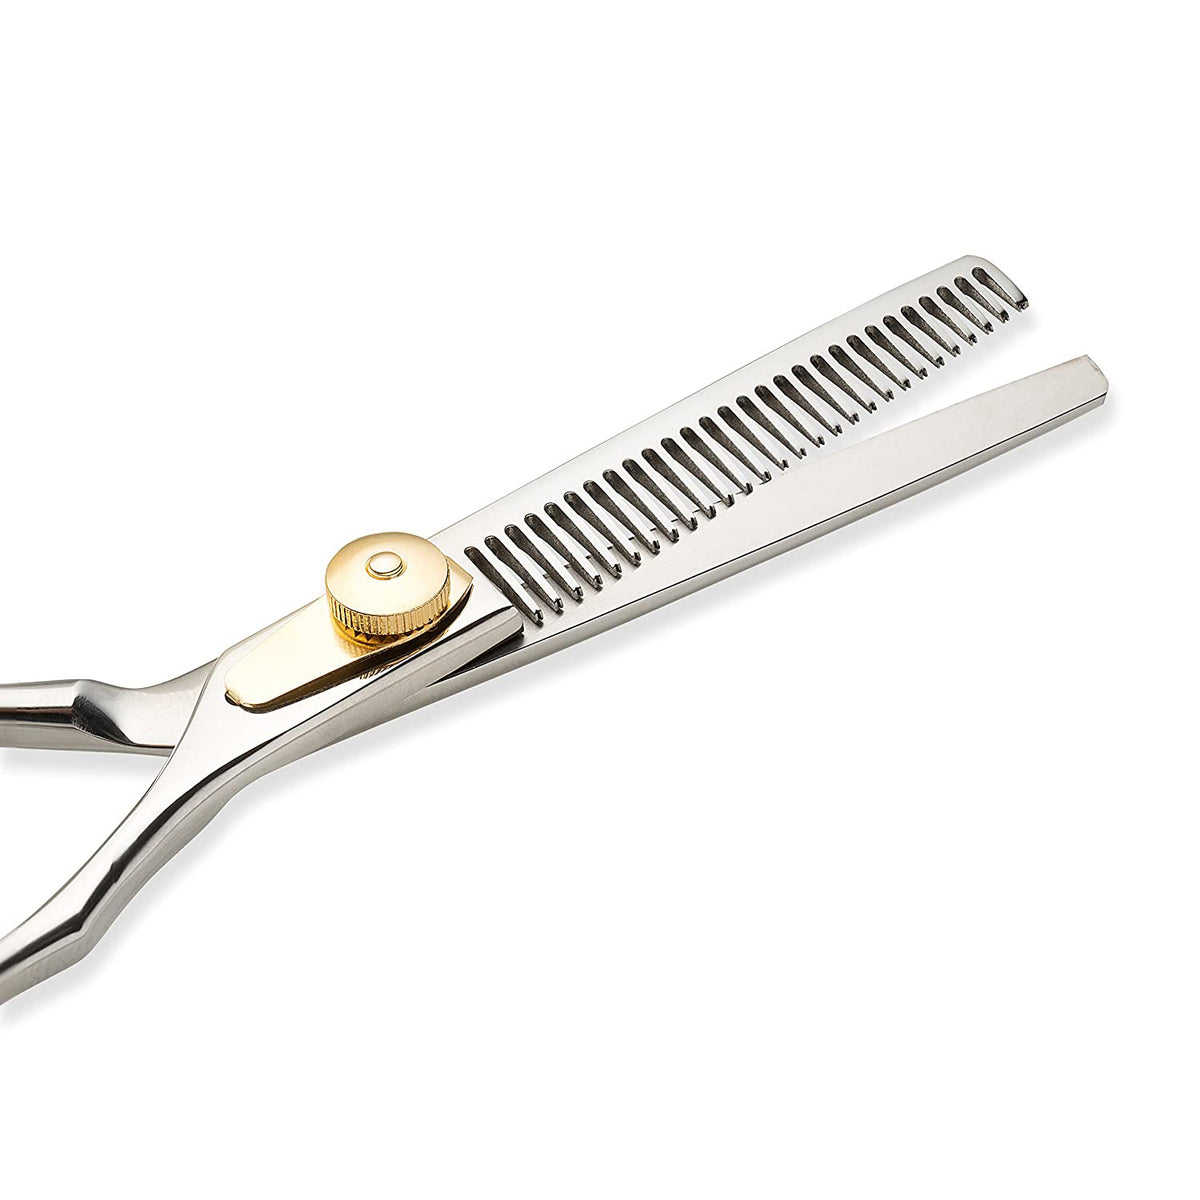 Hair Cutting Scissors Professional Salon Barber Scissors, One Comb Included  